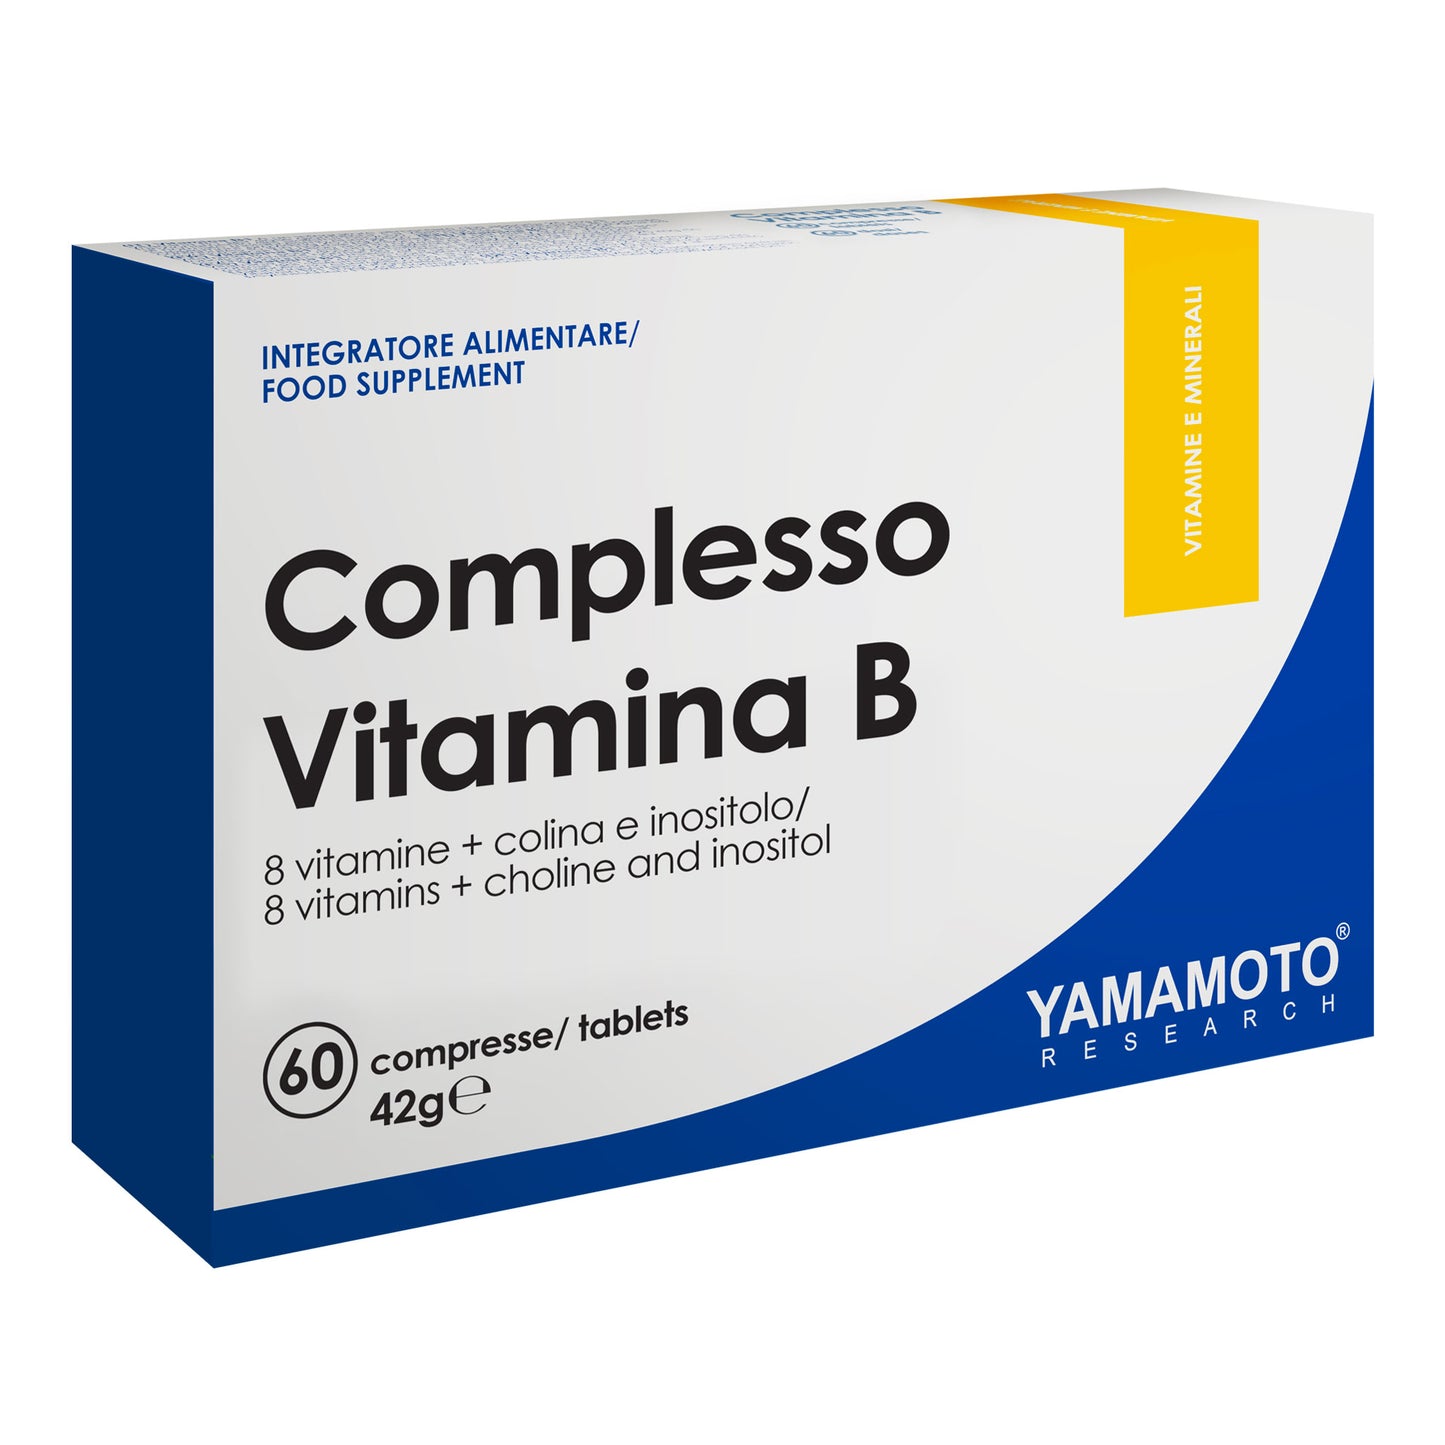 Yamamoto Research Complesso Vitamina B - 60 Tabletten